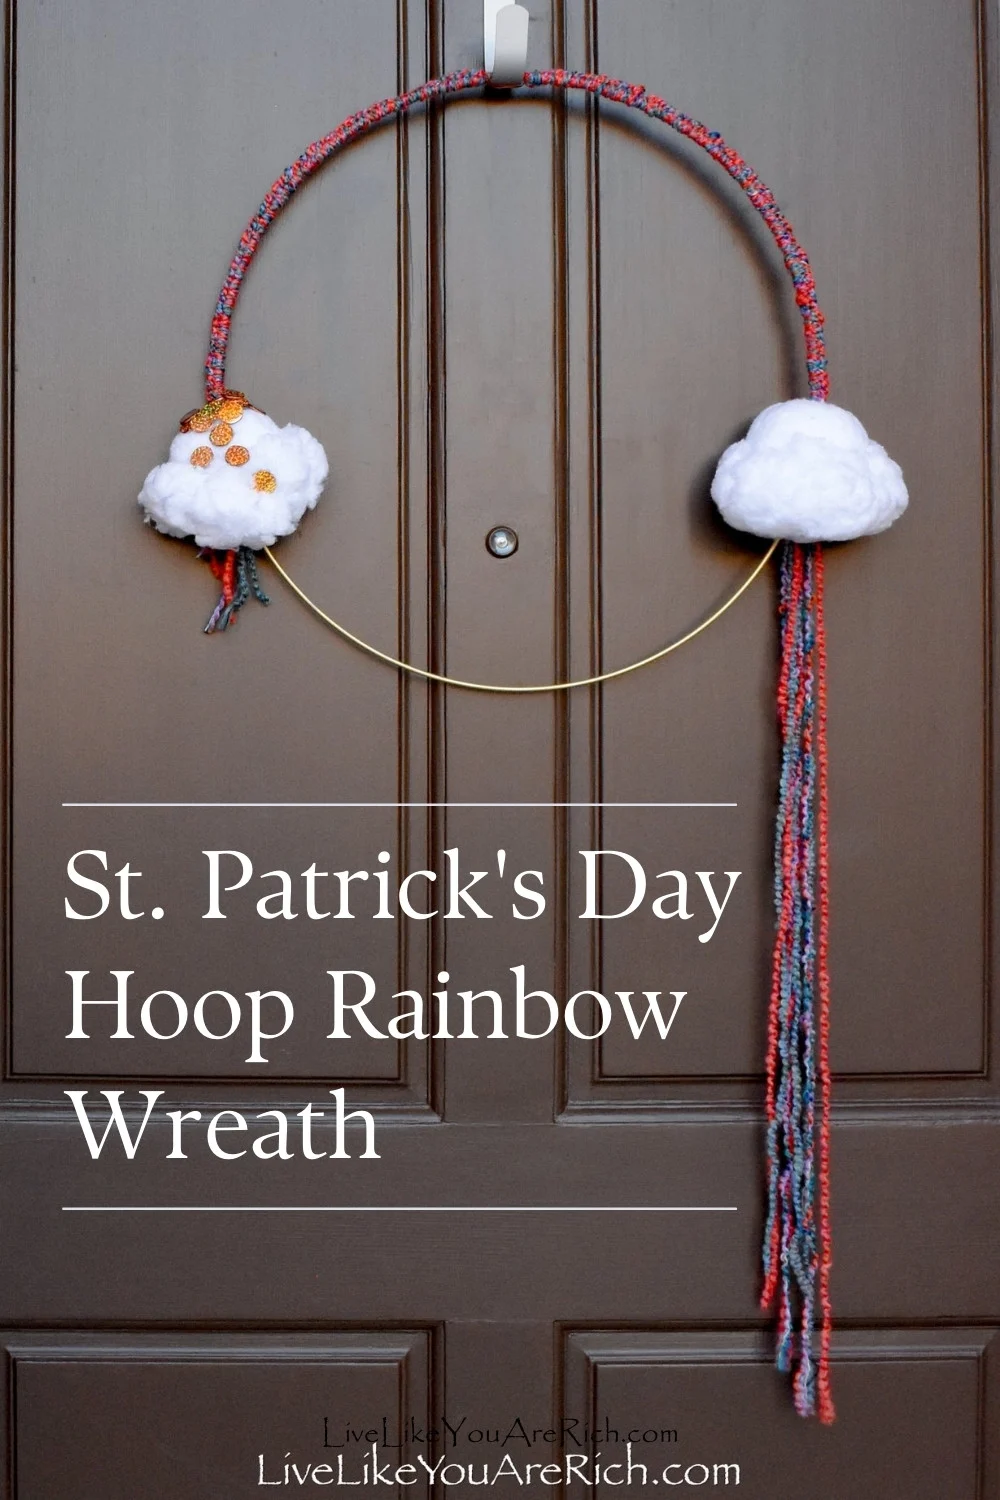 St. Patrick's Day Hoop Rainbow Wreath